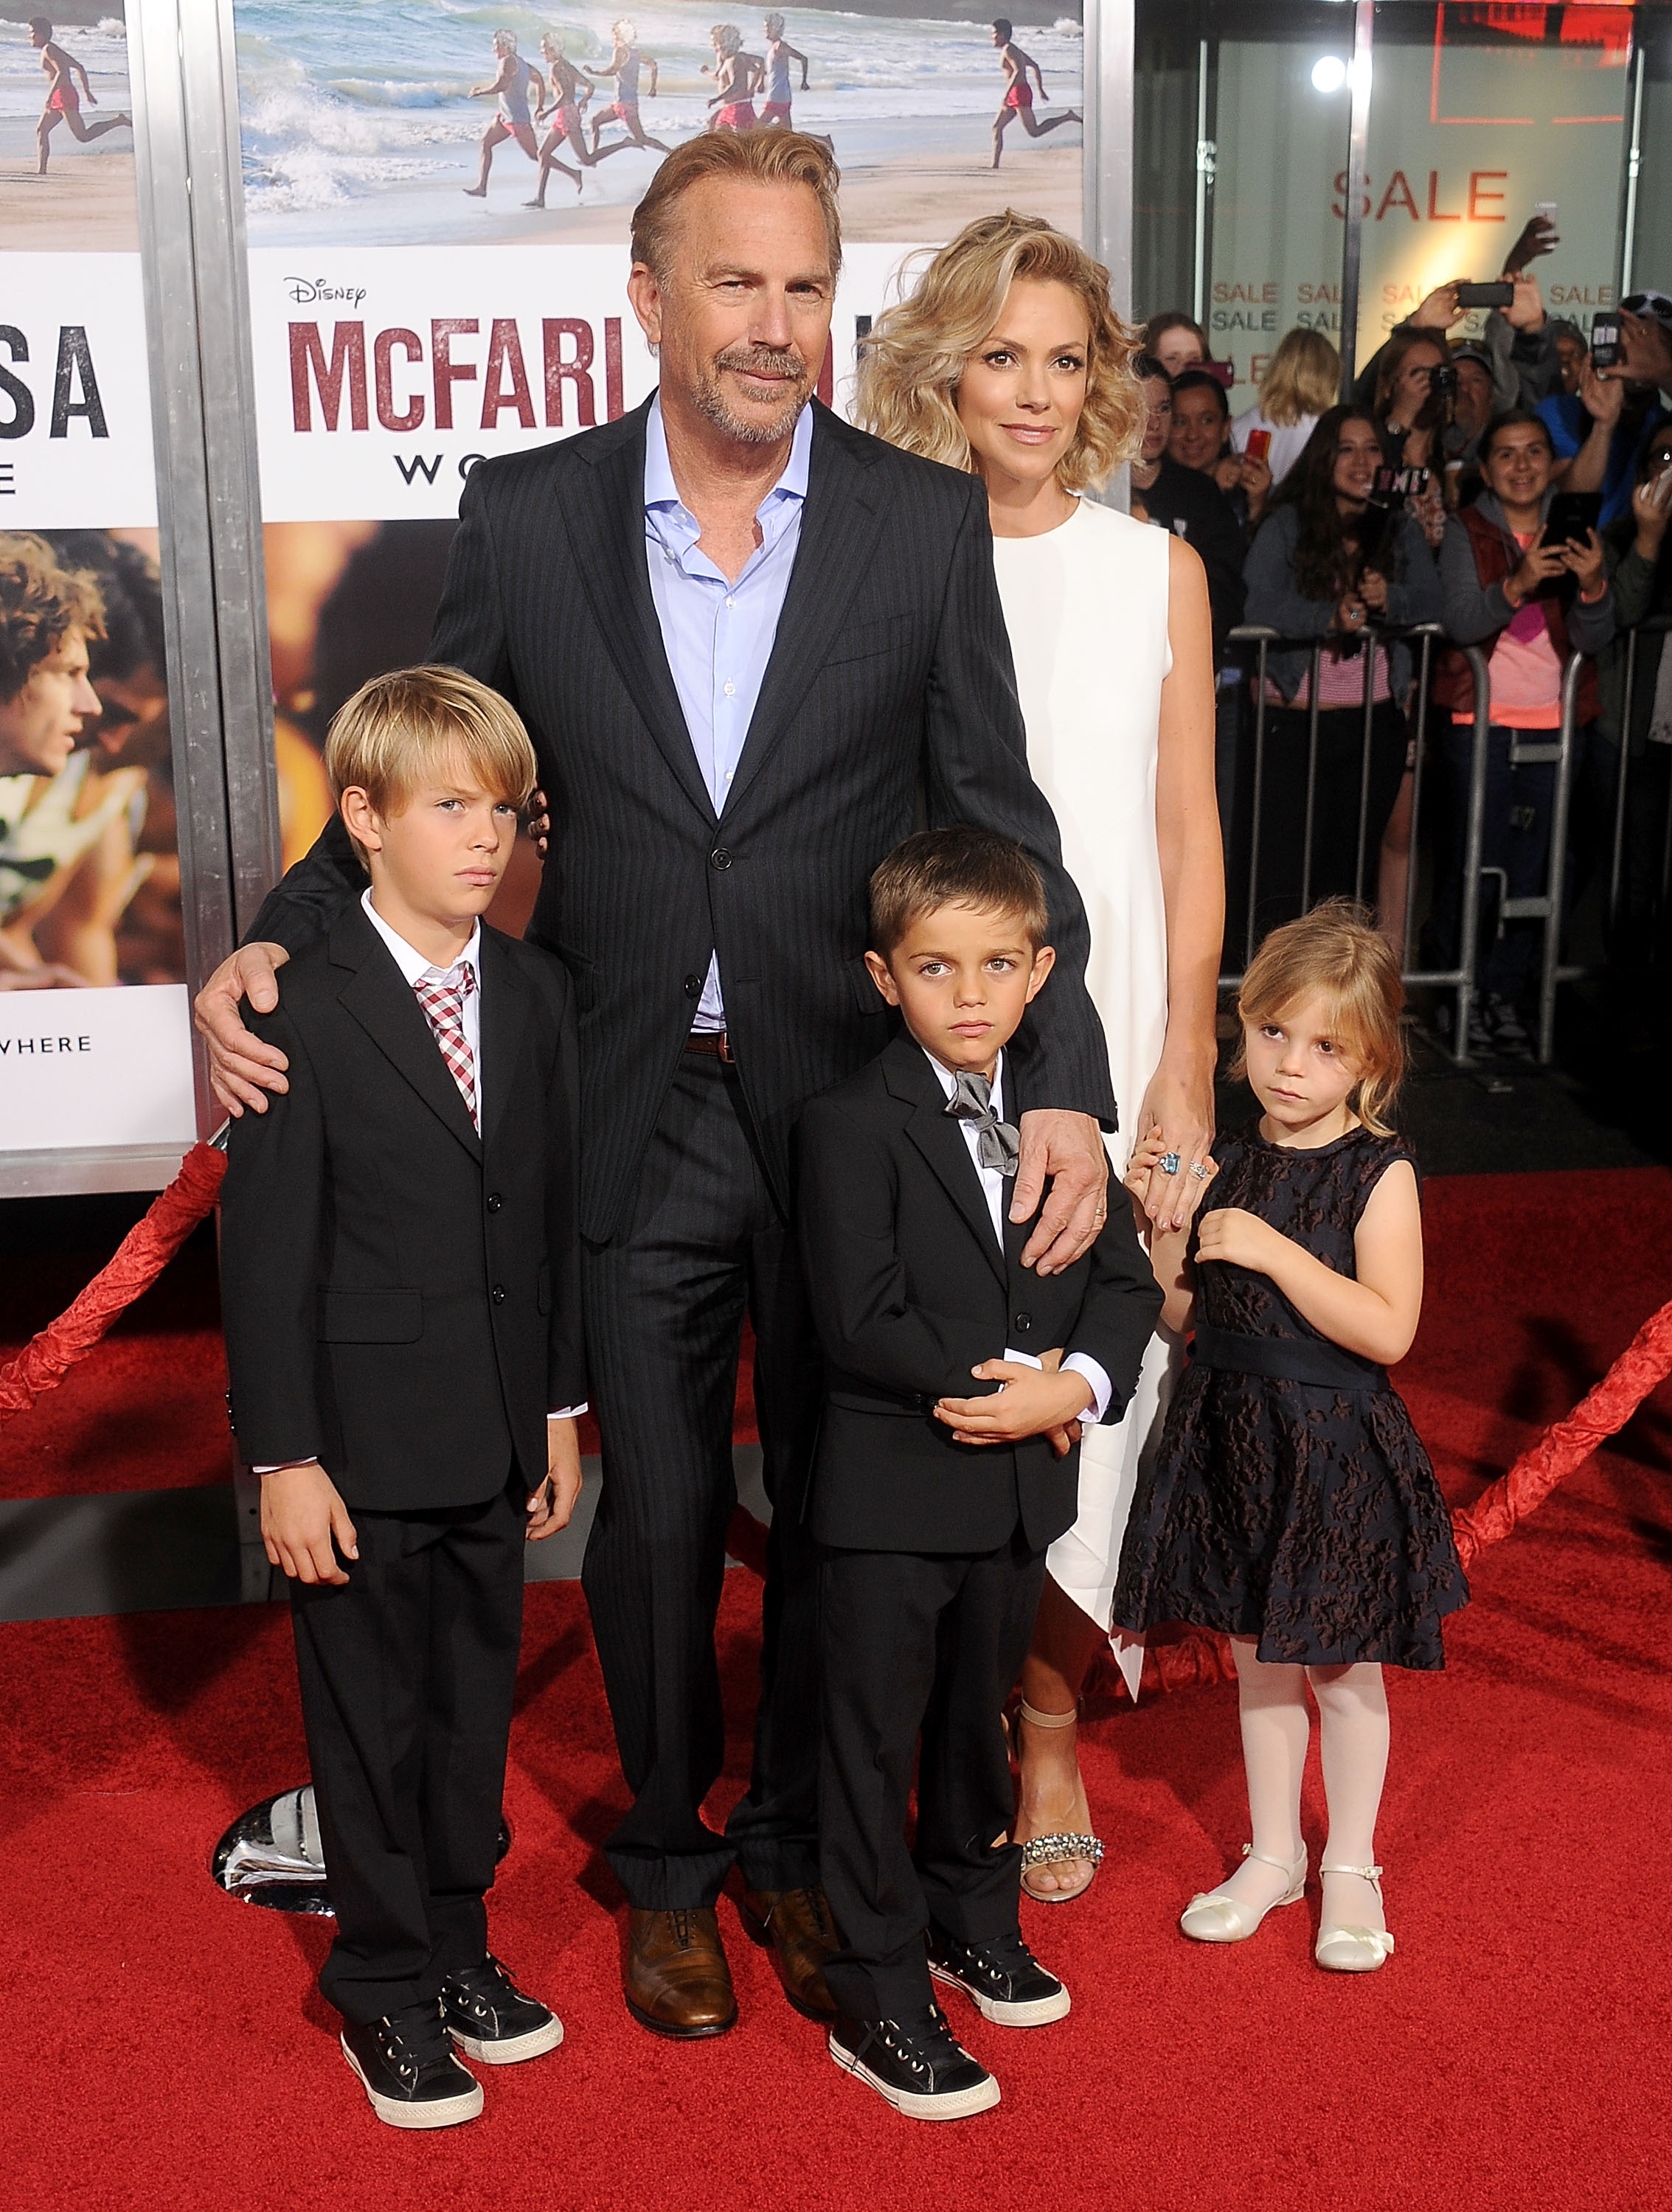 Kevin Costner, sa femme Christine et ses enfants Grace Avery Costner, Hayes Logan Costner et Cayden Wyatt Costner arrivent à la première mondiale du film de Disney "McFarland, USA" au El Capitan Theatre | Source : Getty Images